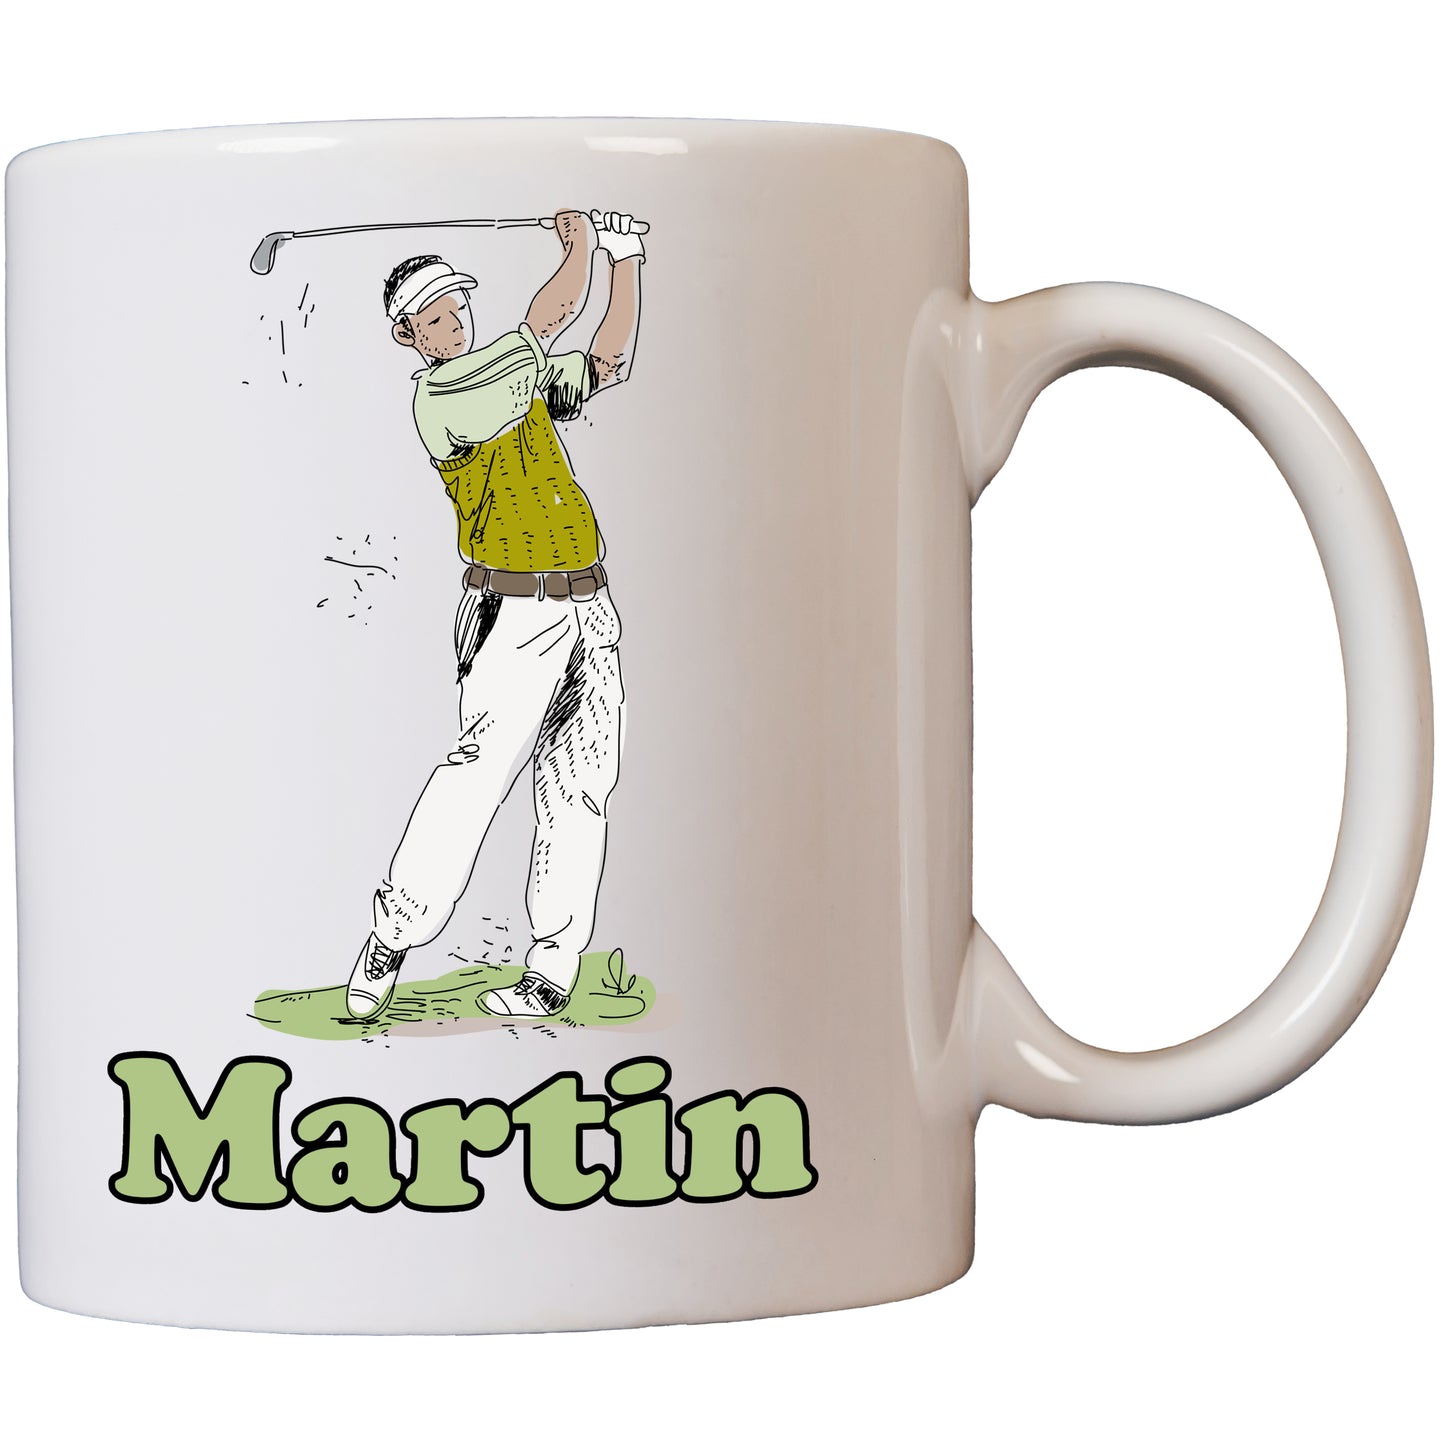 Golfer Name Coffee Mug | Personalised Ceramic 11oz Volume Cup